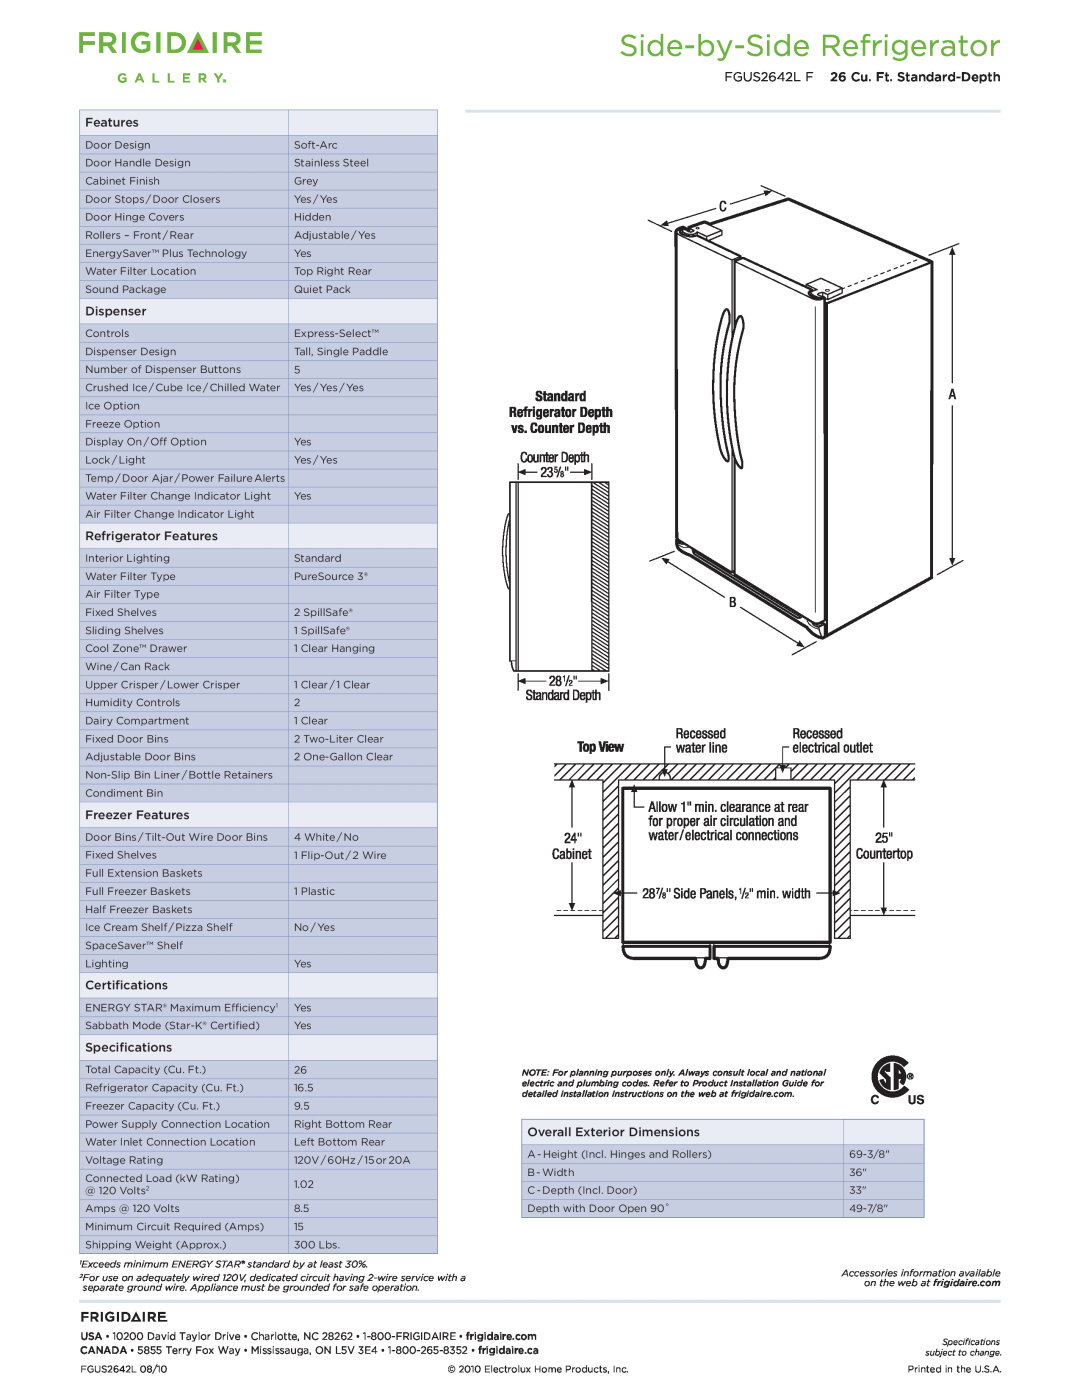 Frigidaire dimensions Side-by-SideRefrigerator, FGUS2642L F 26 Cu. Ft. Standard-Depth 